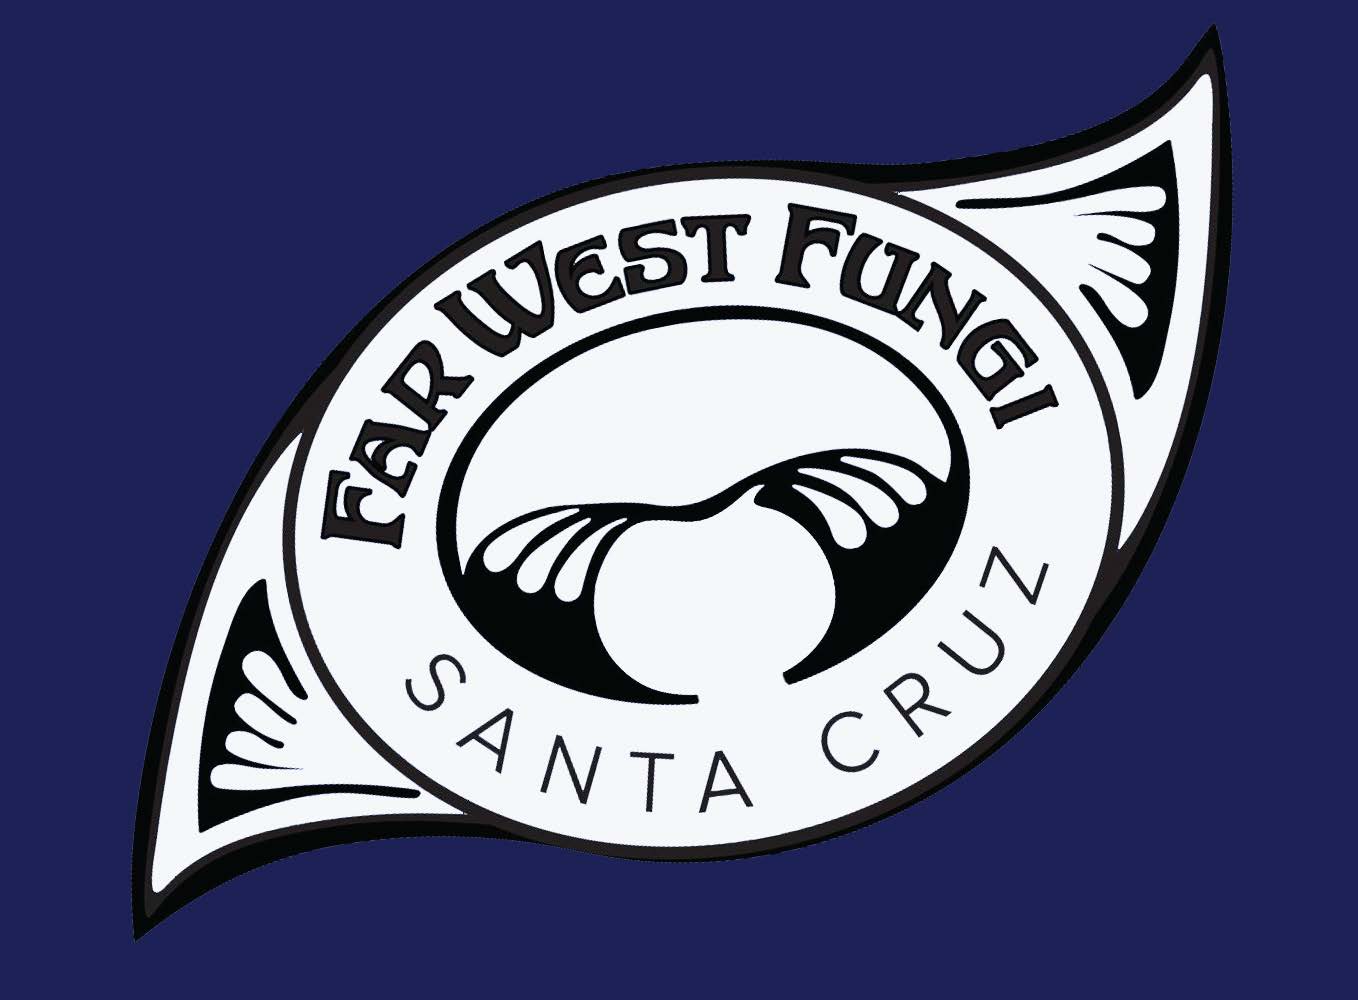 Logo for Far West Fungi Santa Cruz